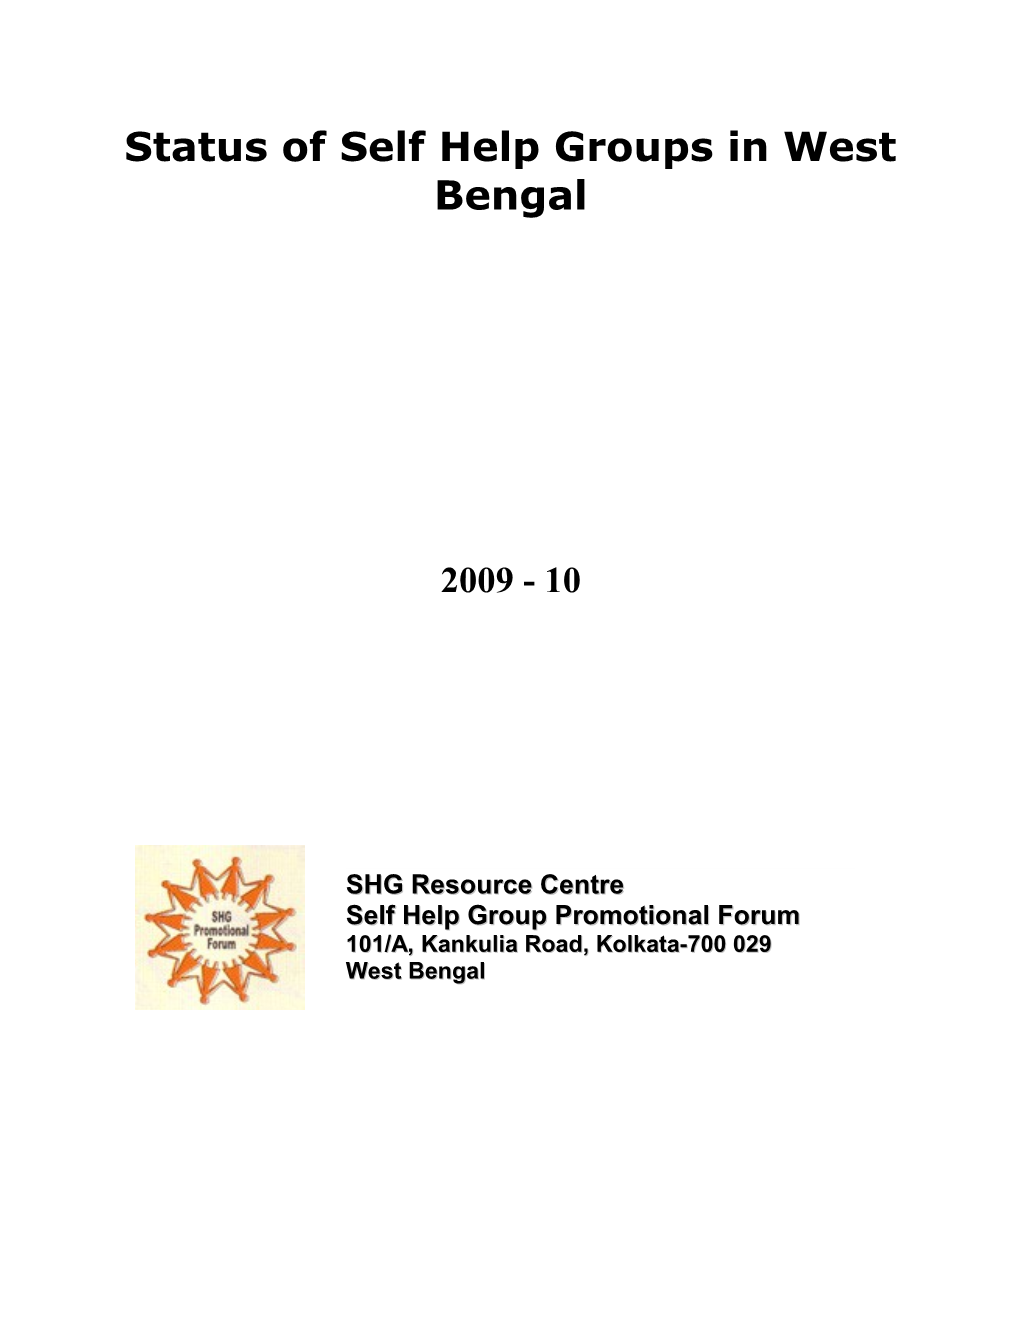 Status of Self Help Groups in West Bengal